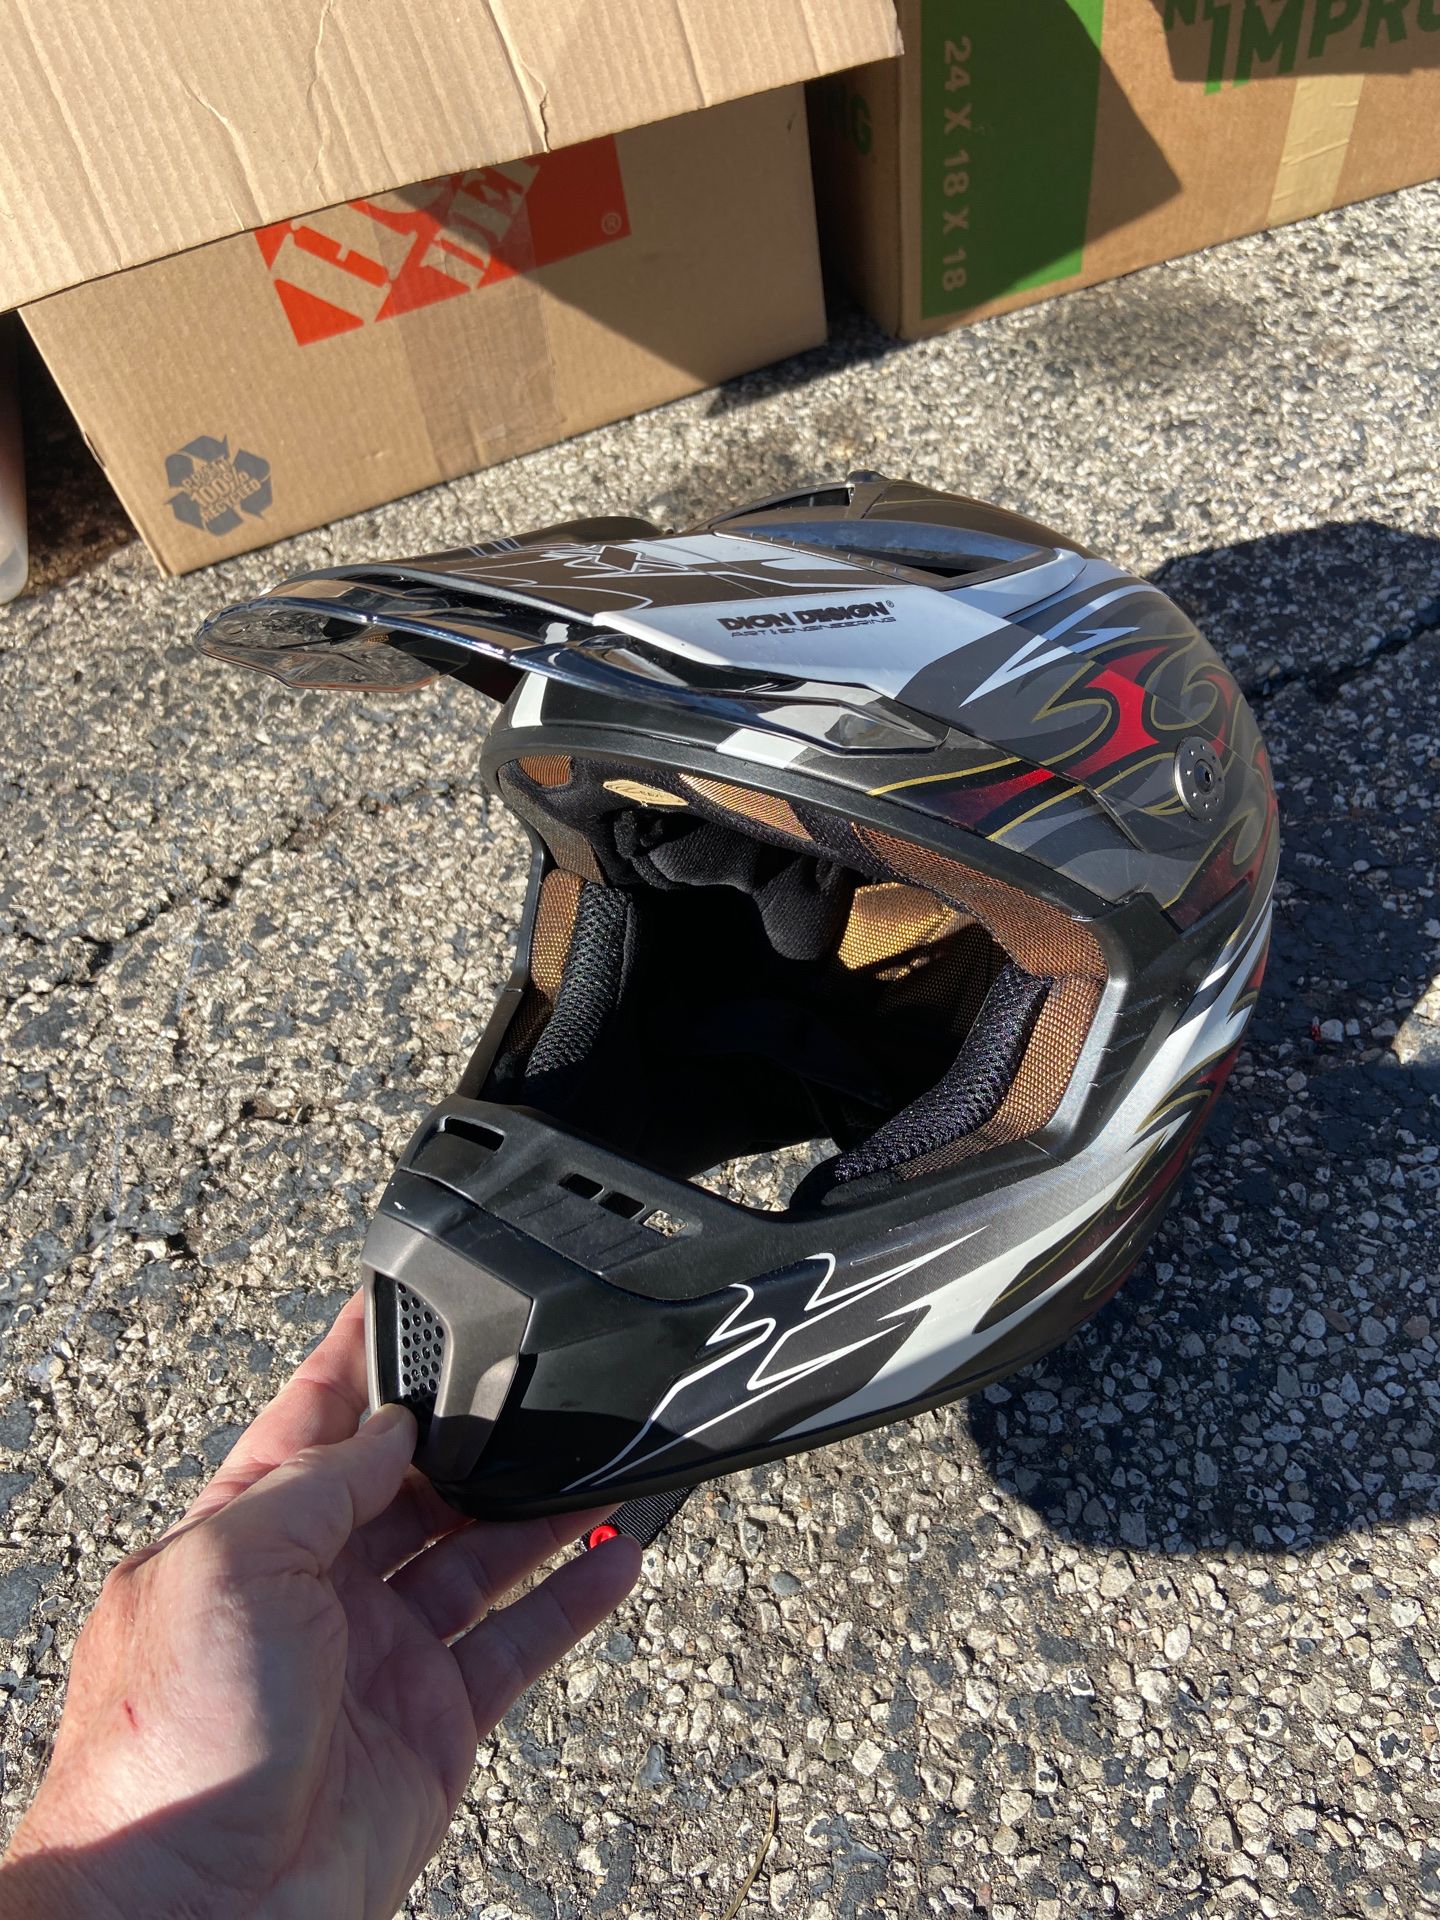 Zox motorcycle helmet!